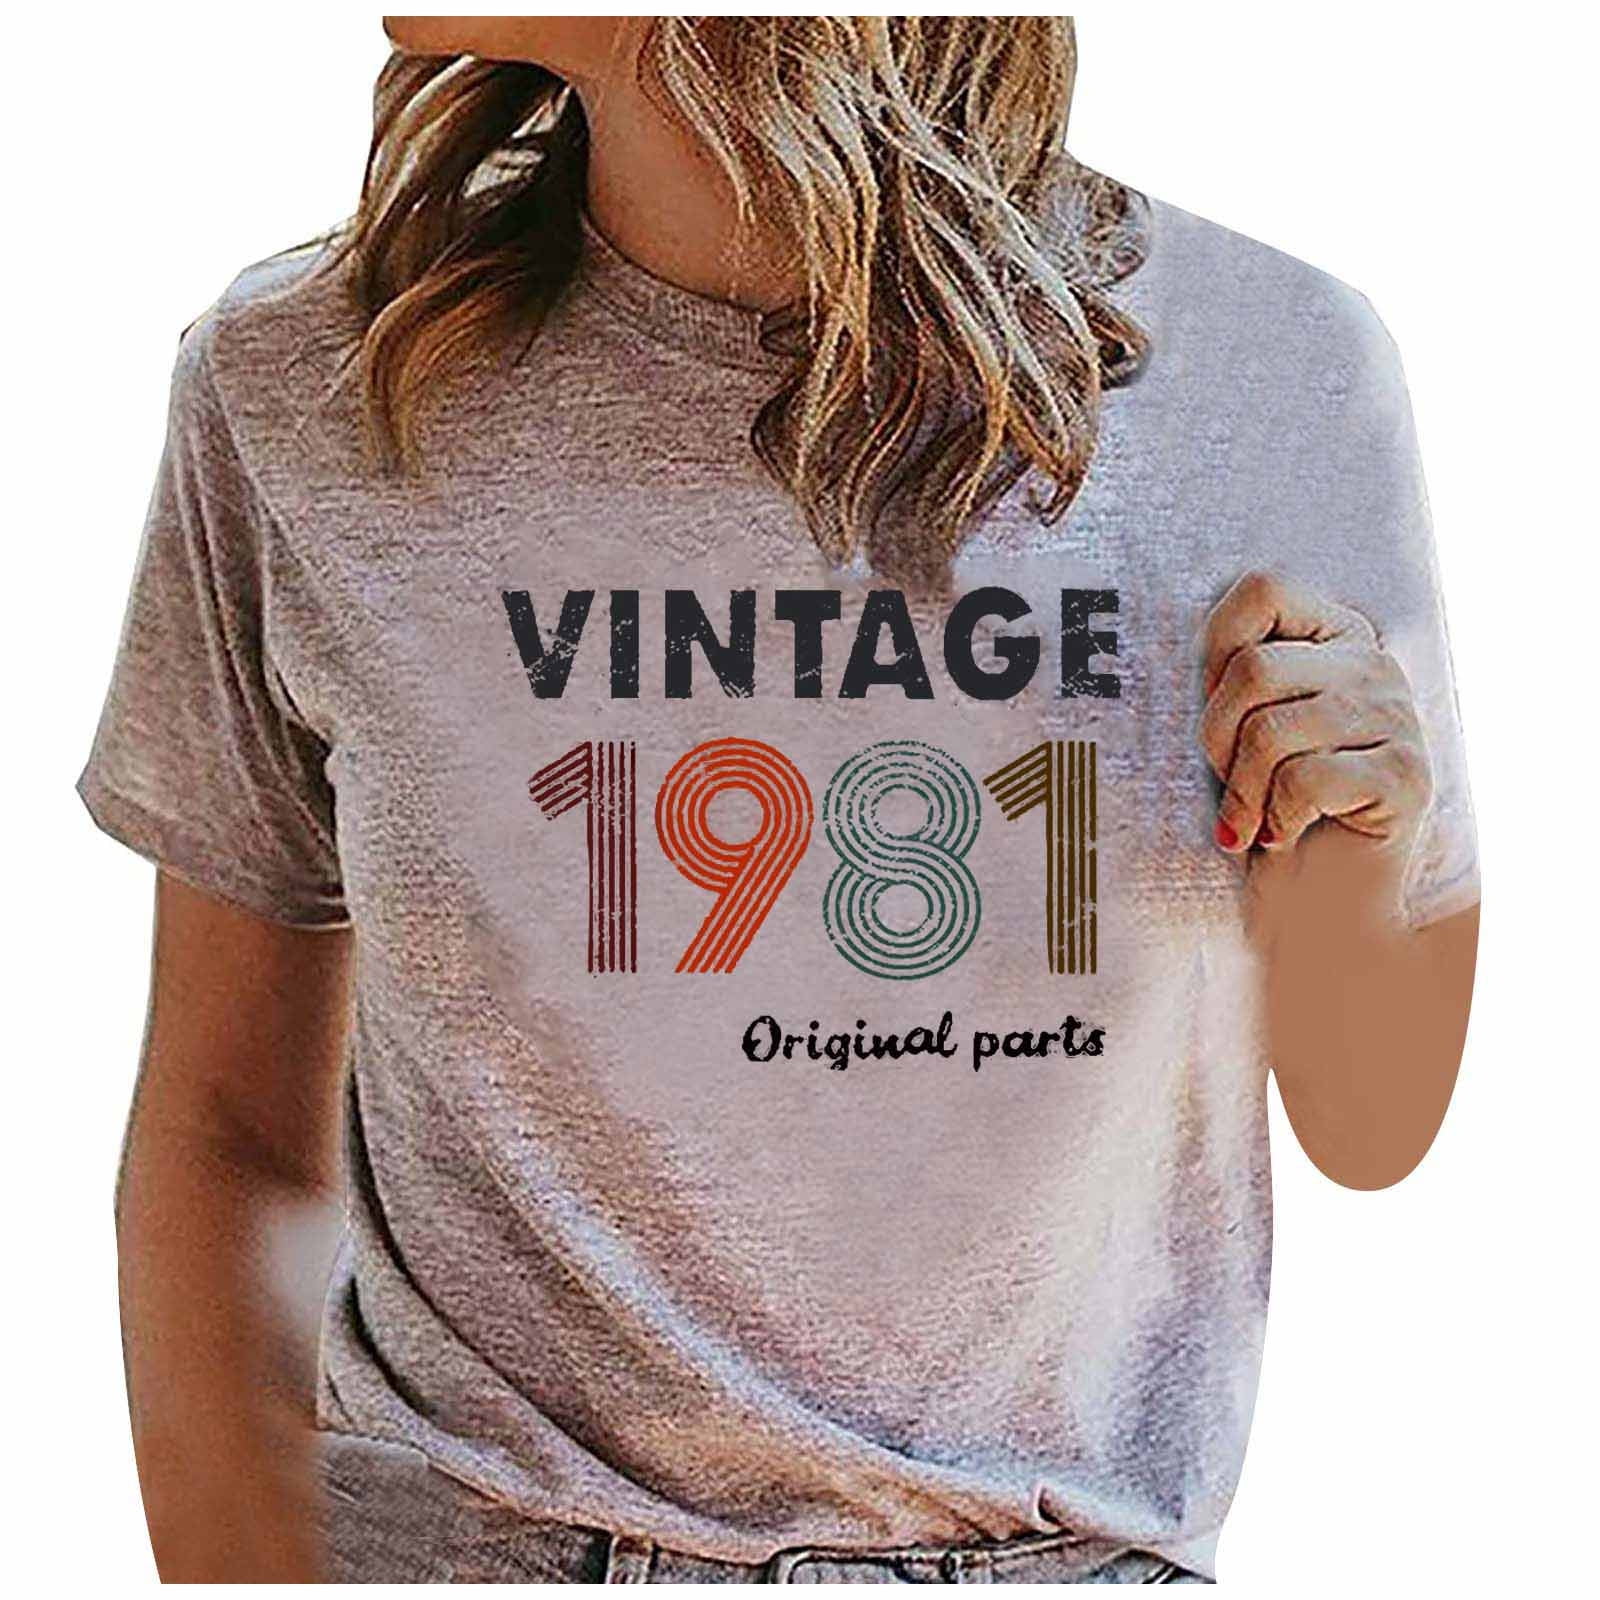 Classy Mood 40th Birthday Gift Shirt Vintage 1981 Casual Shirt